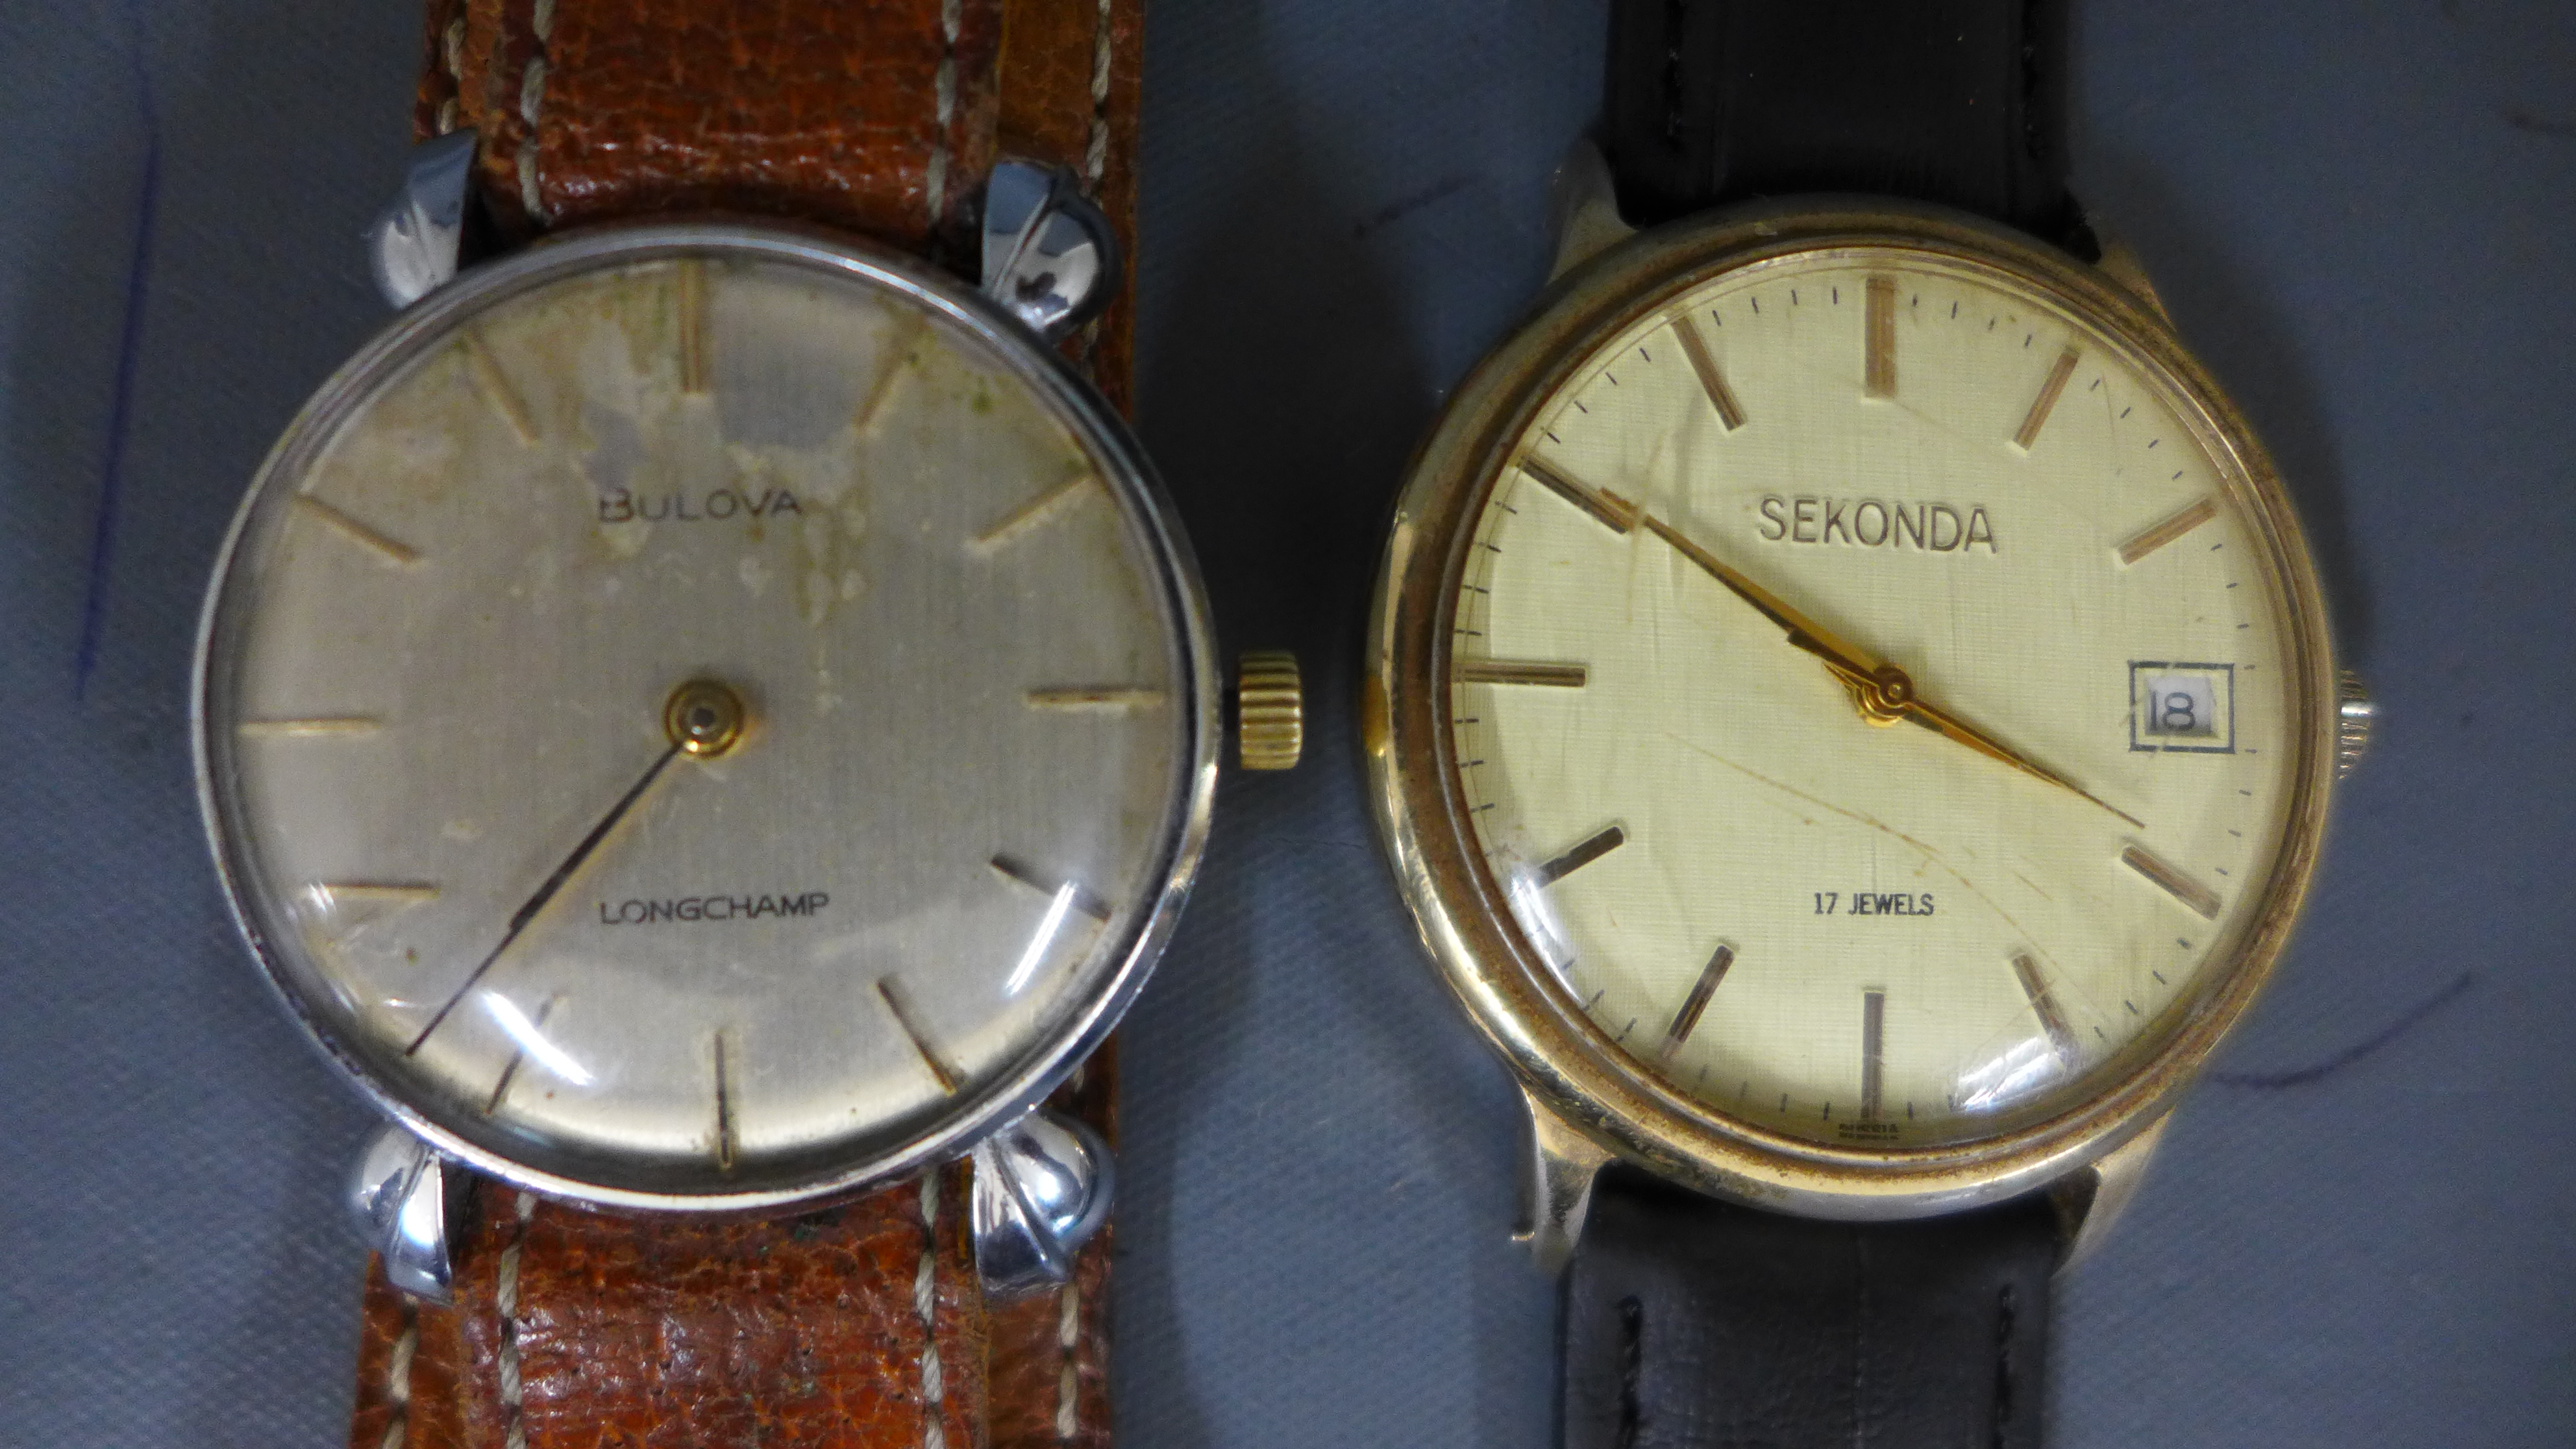 Two Gents wristwatches - Sekonda manual wind and Bulova Longchamp manual wind Condition report: